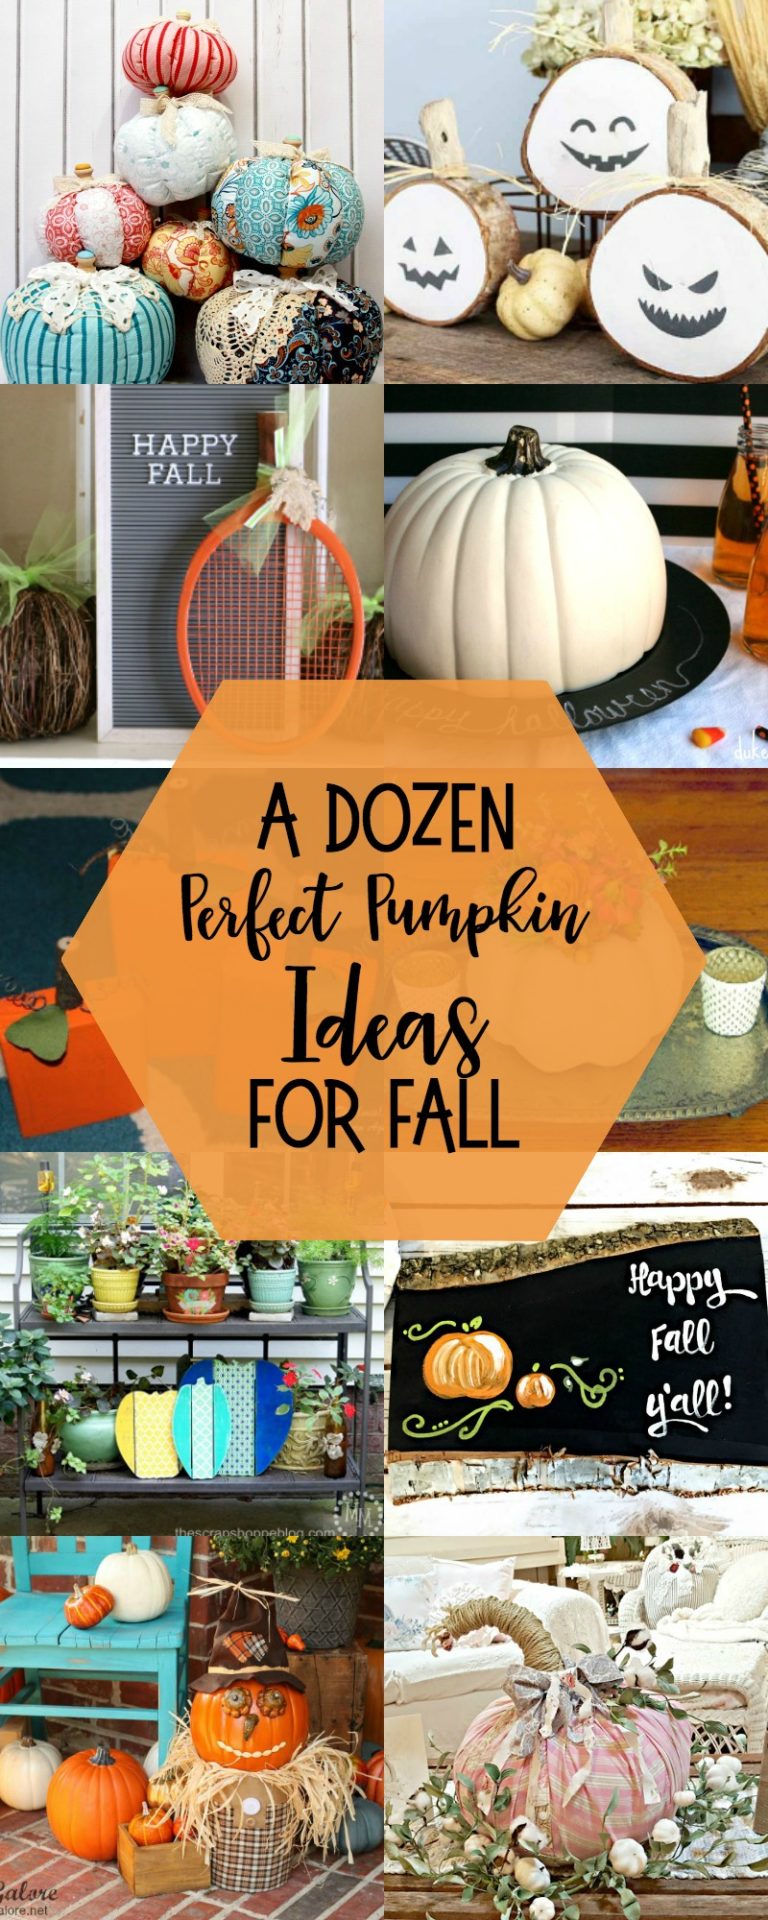 Perfect Pumpkin Ideas for Fall